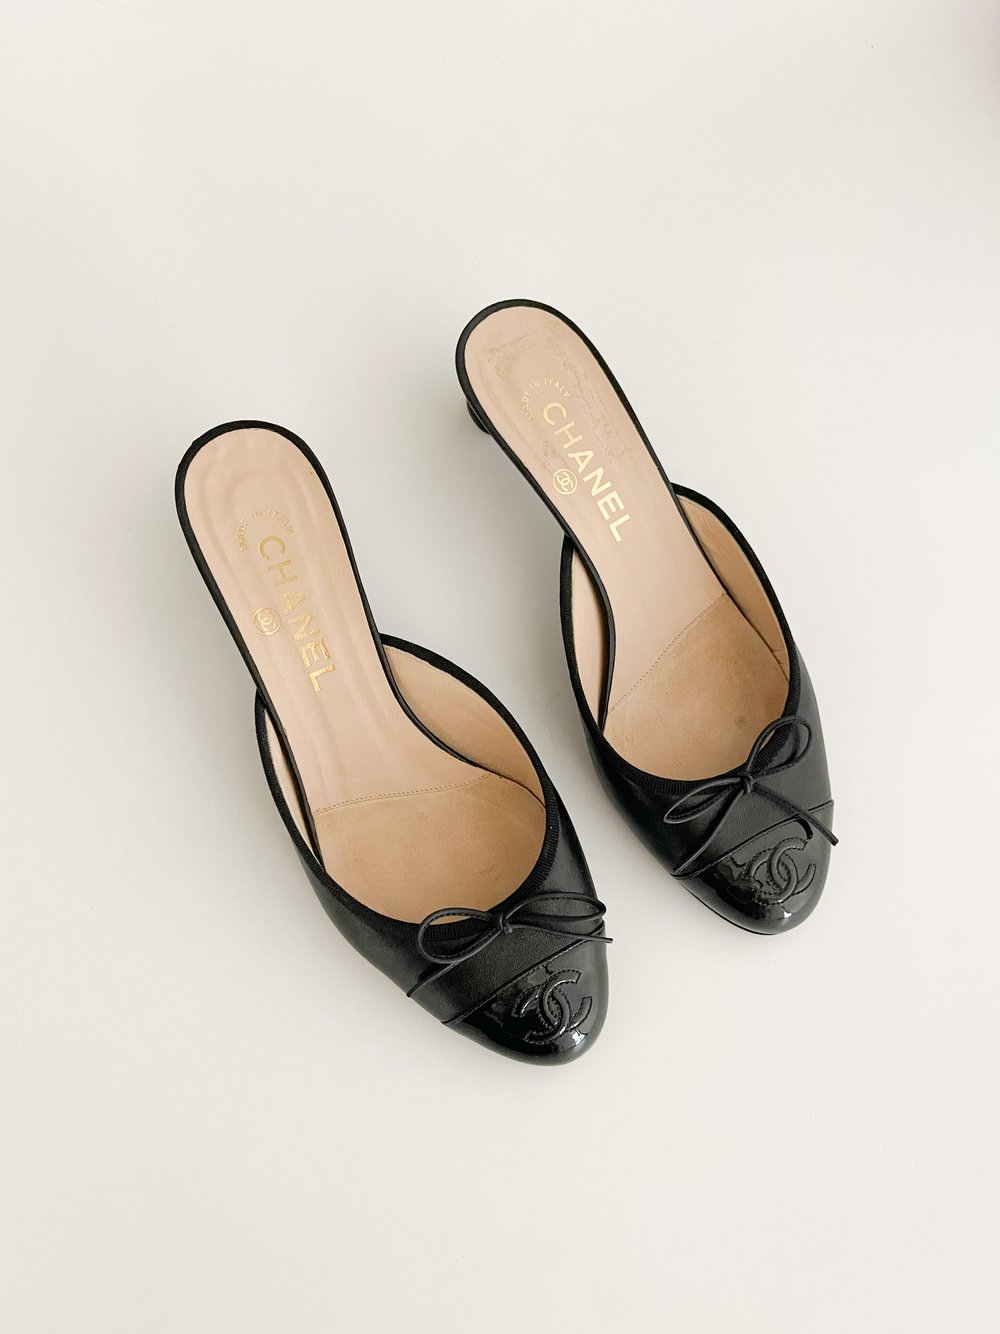 VINTAGE CHANEL CC Bow black and beige Mule sandals size 38.5